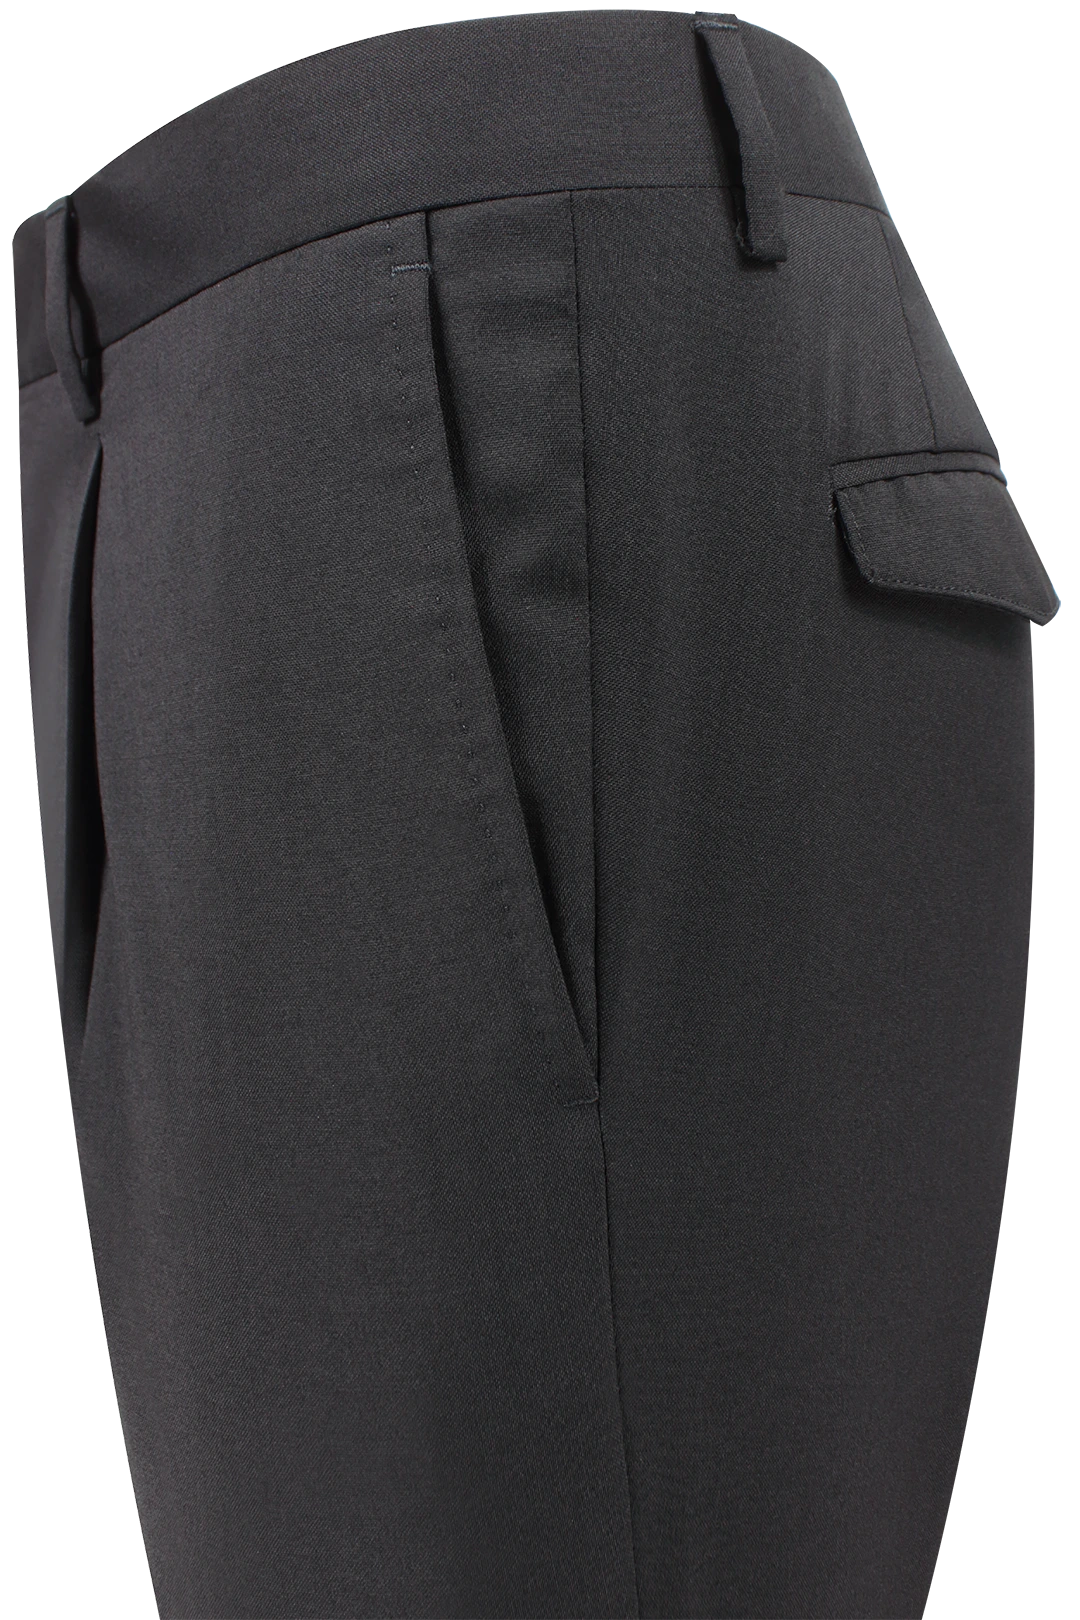 Pantalone con pince in tela di lana nera tasca